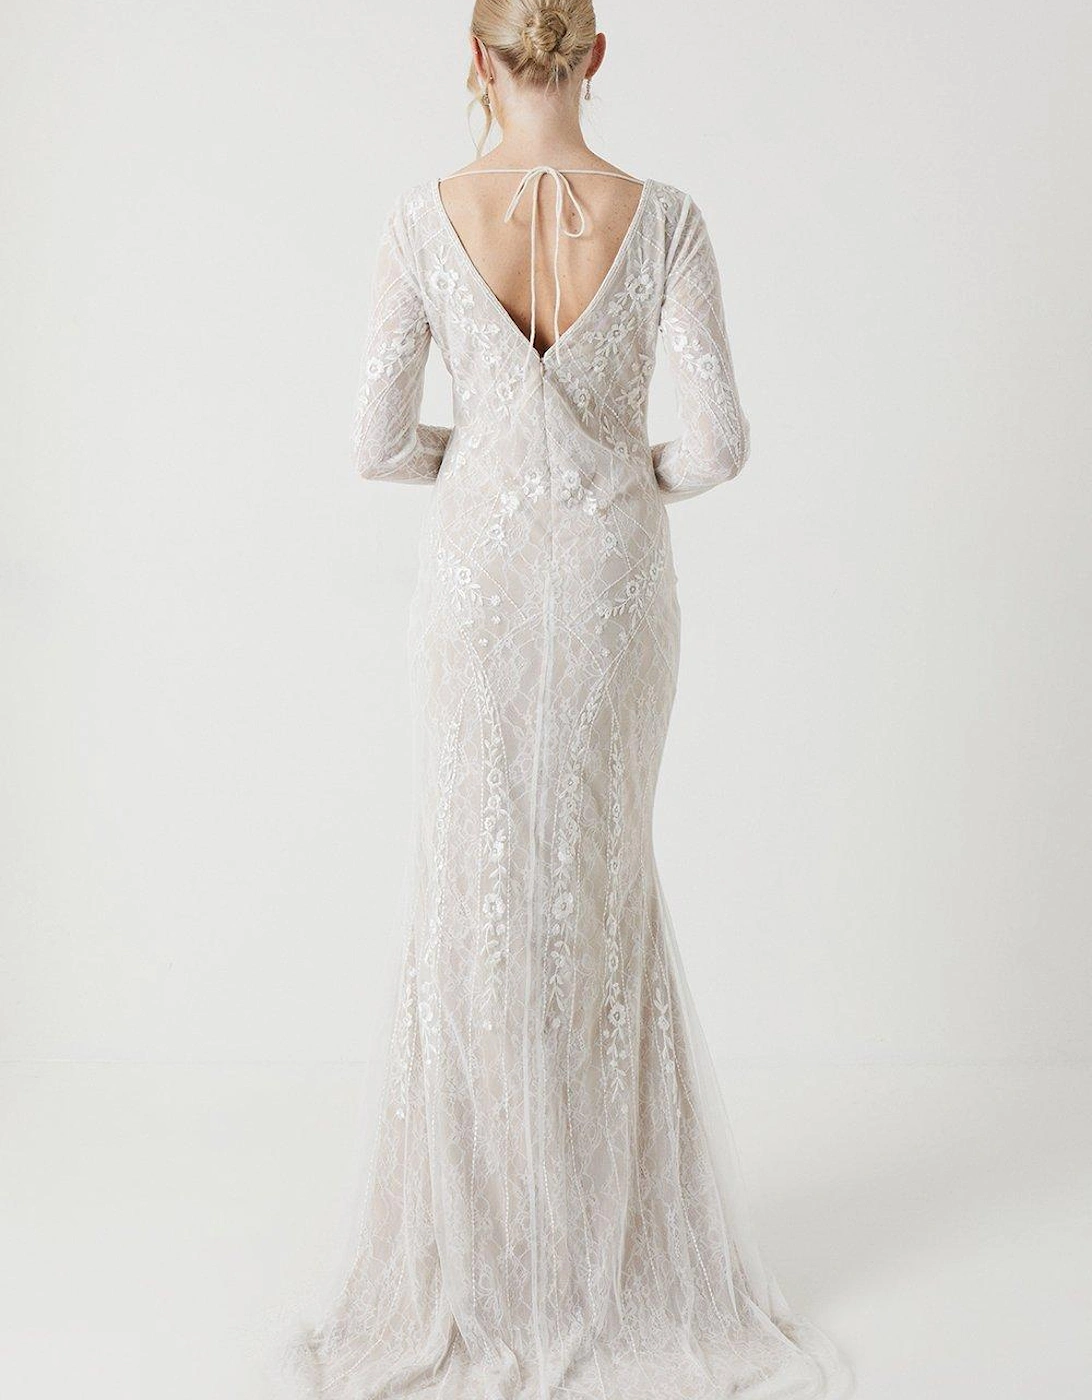 Premium Lace Overlay Handstitched Long Sleeve Wedding Dress